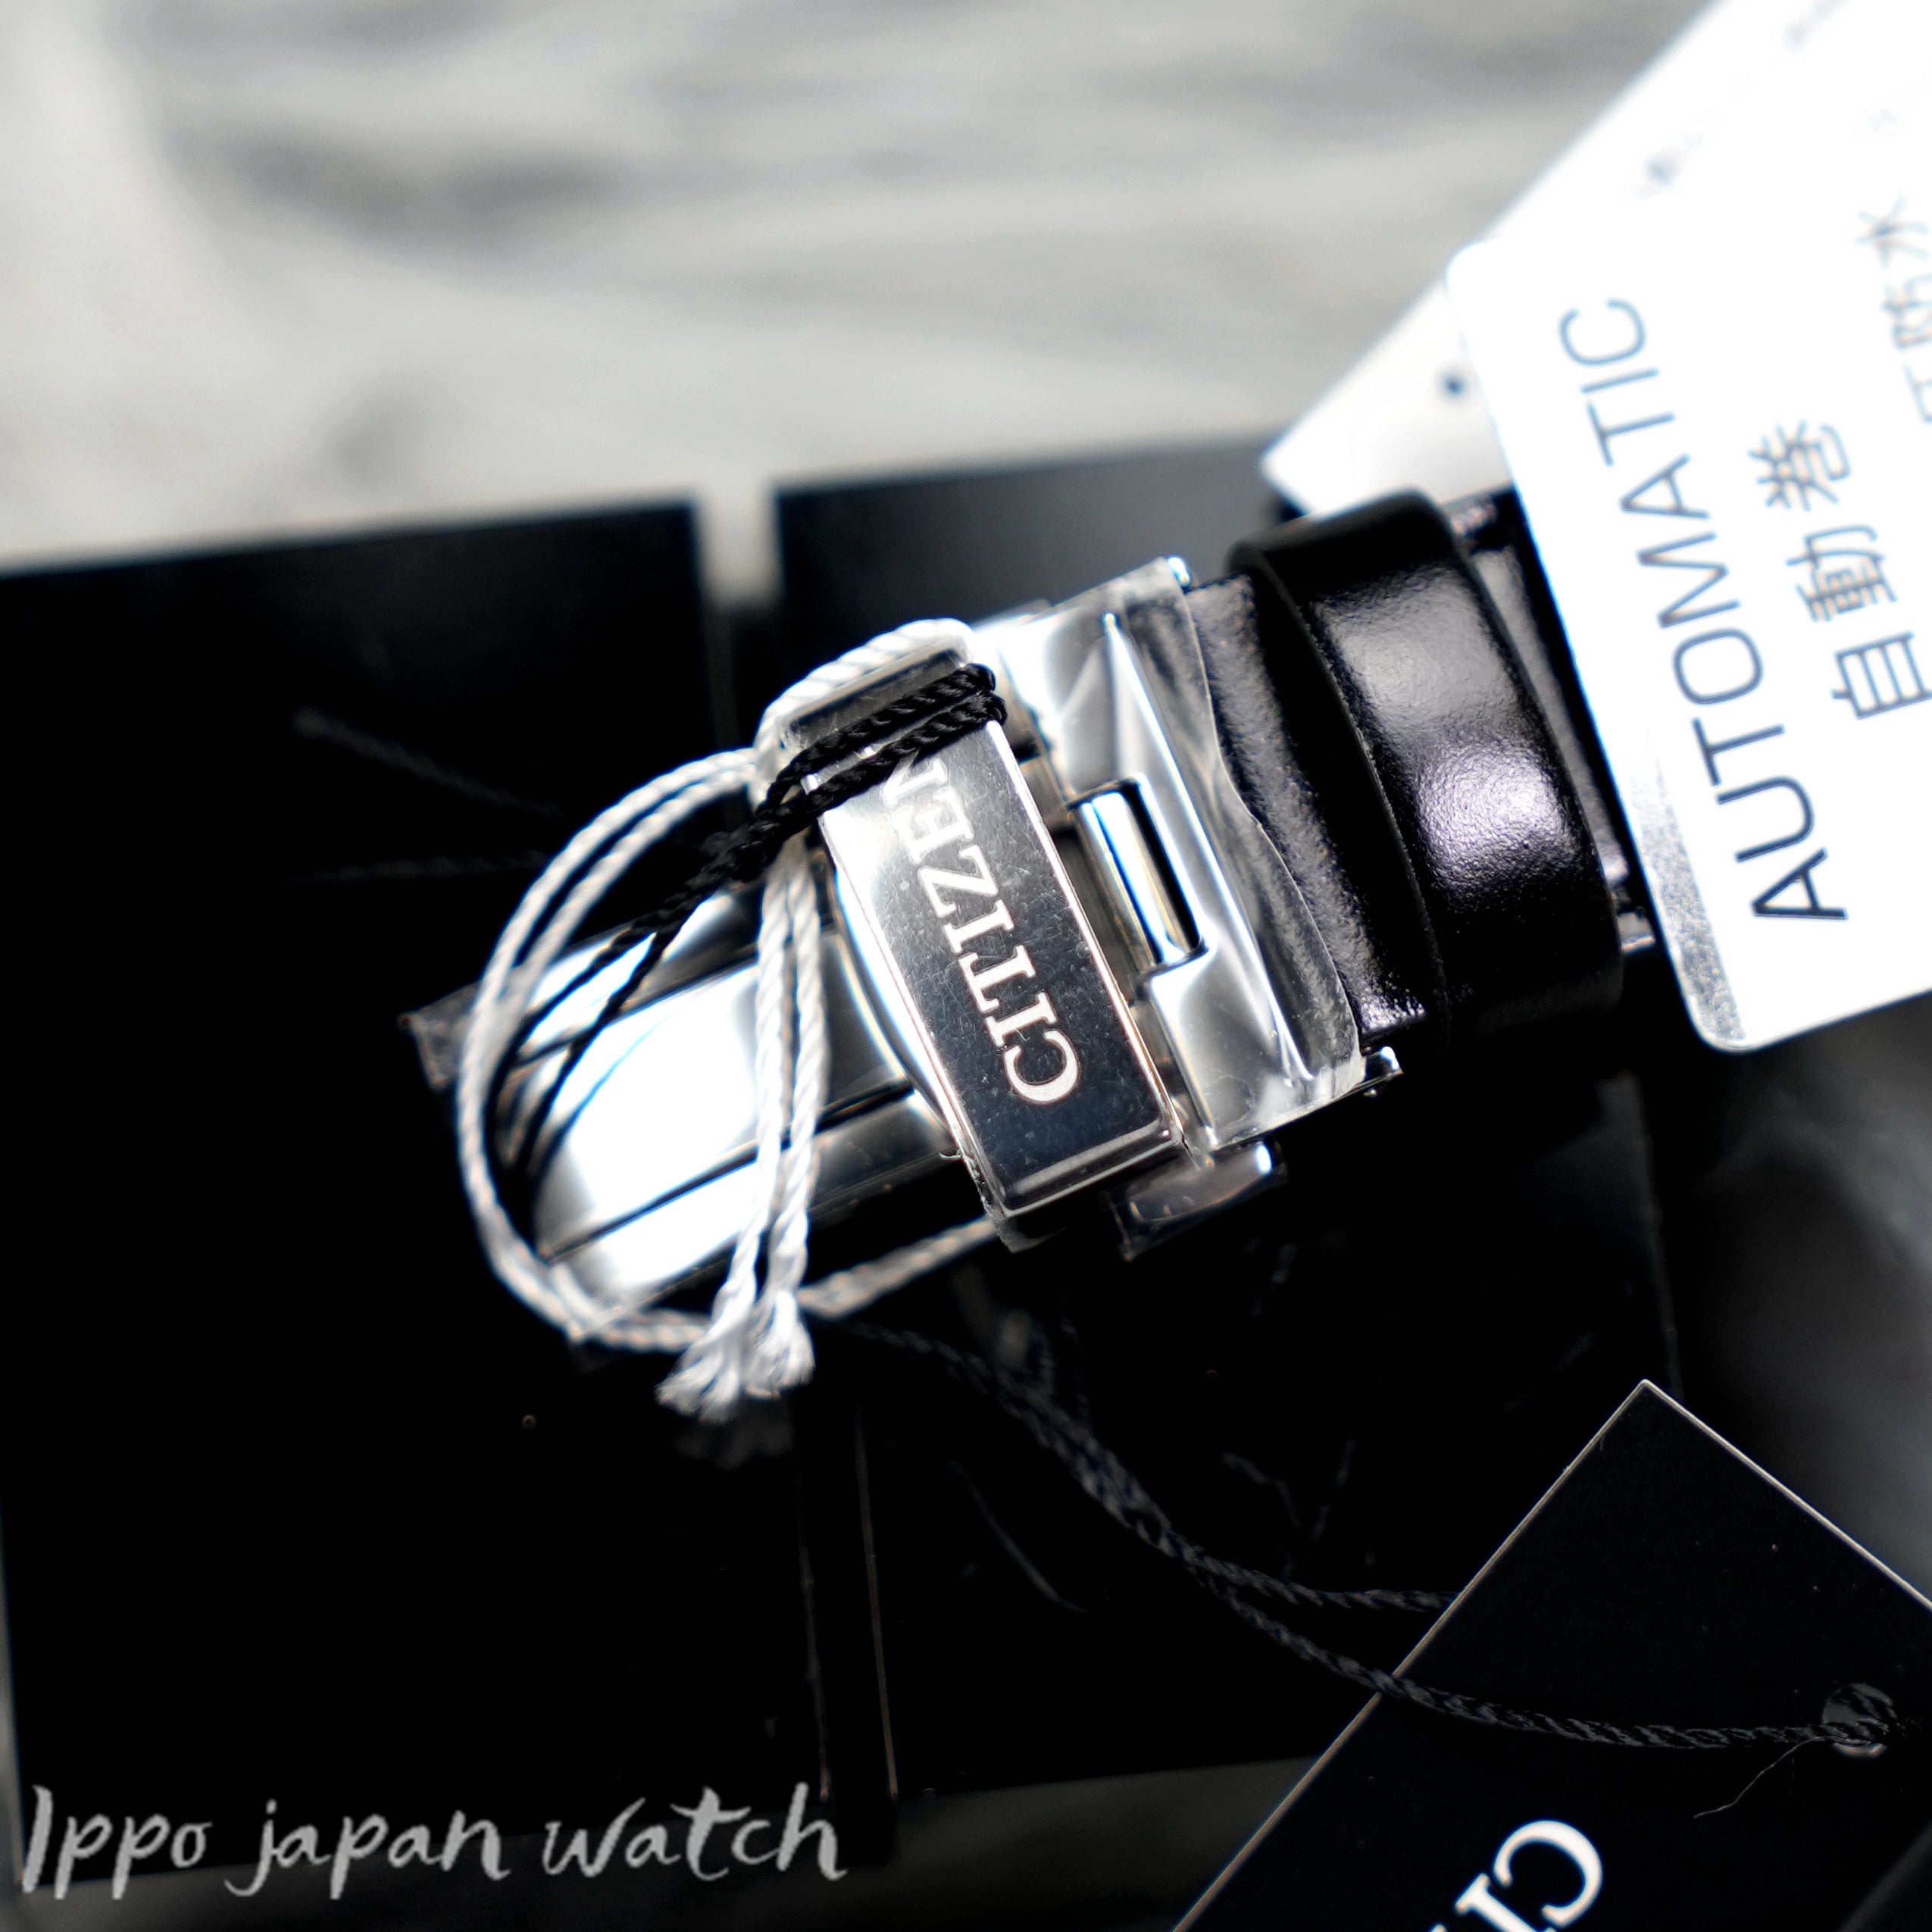 CITIZEN collection NB1060-04A Mechanical Japan watch - IPPO JAPAN WATCH 